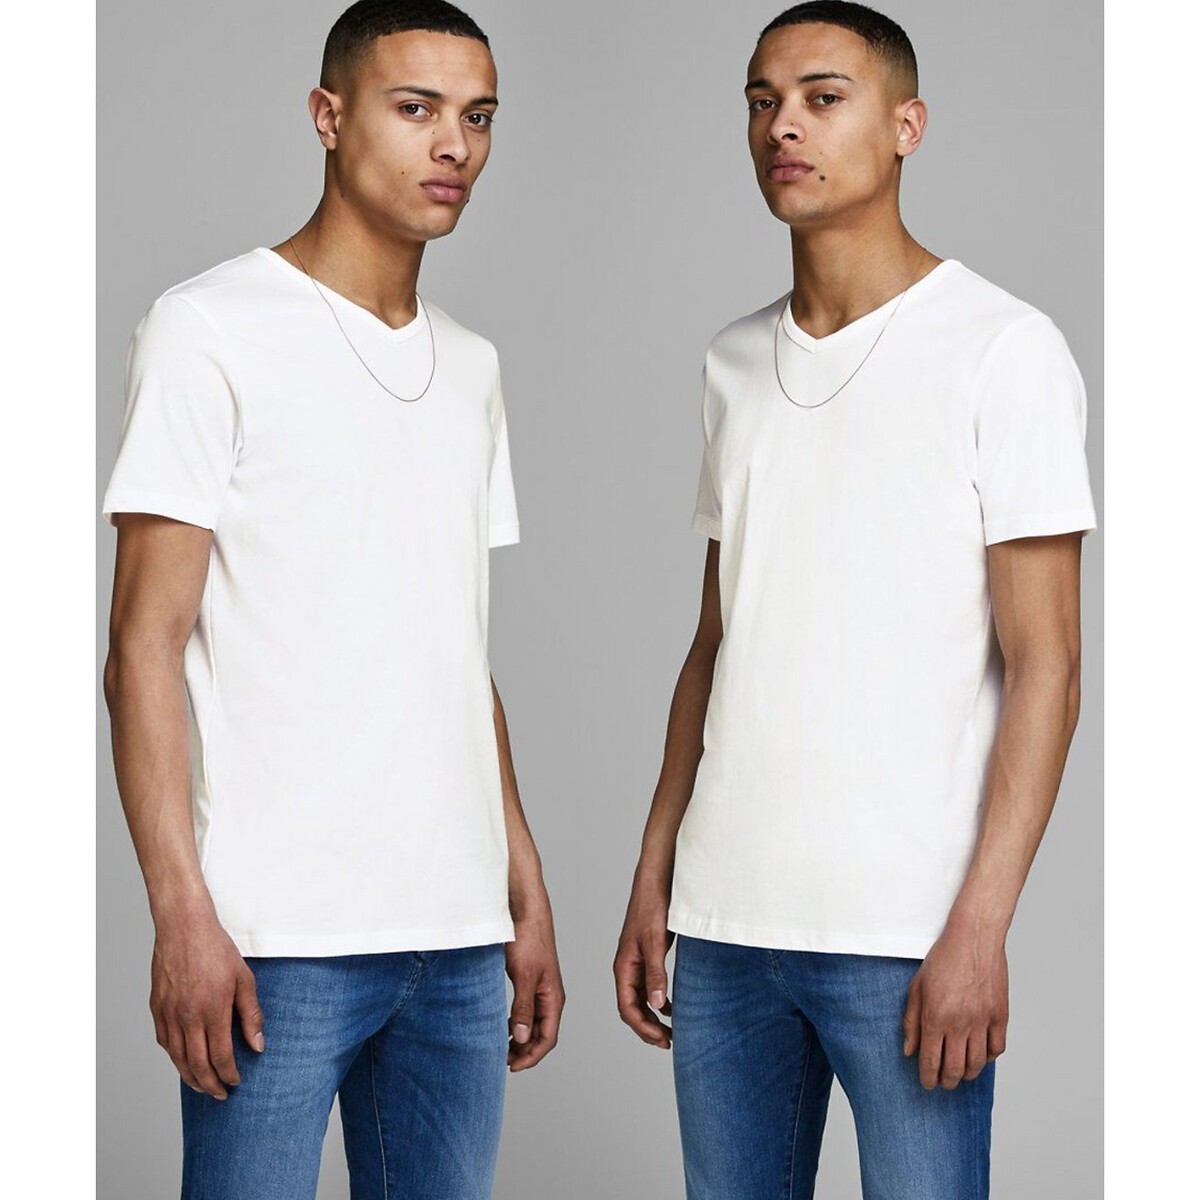 Комплект из 2 футболок с LaRedoute Короткими рукавами XL белый, размер XL - фото 2